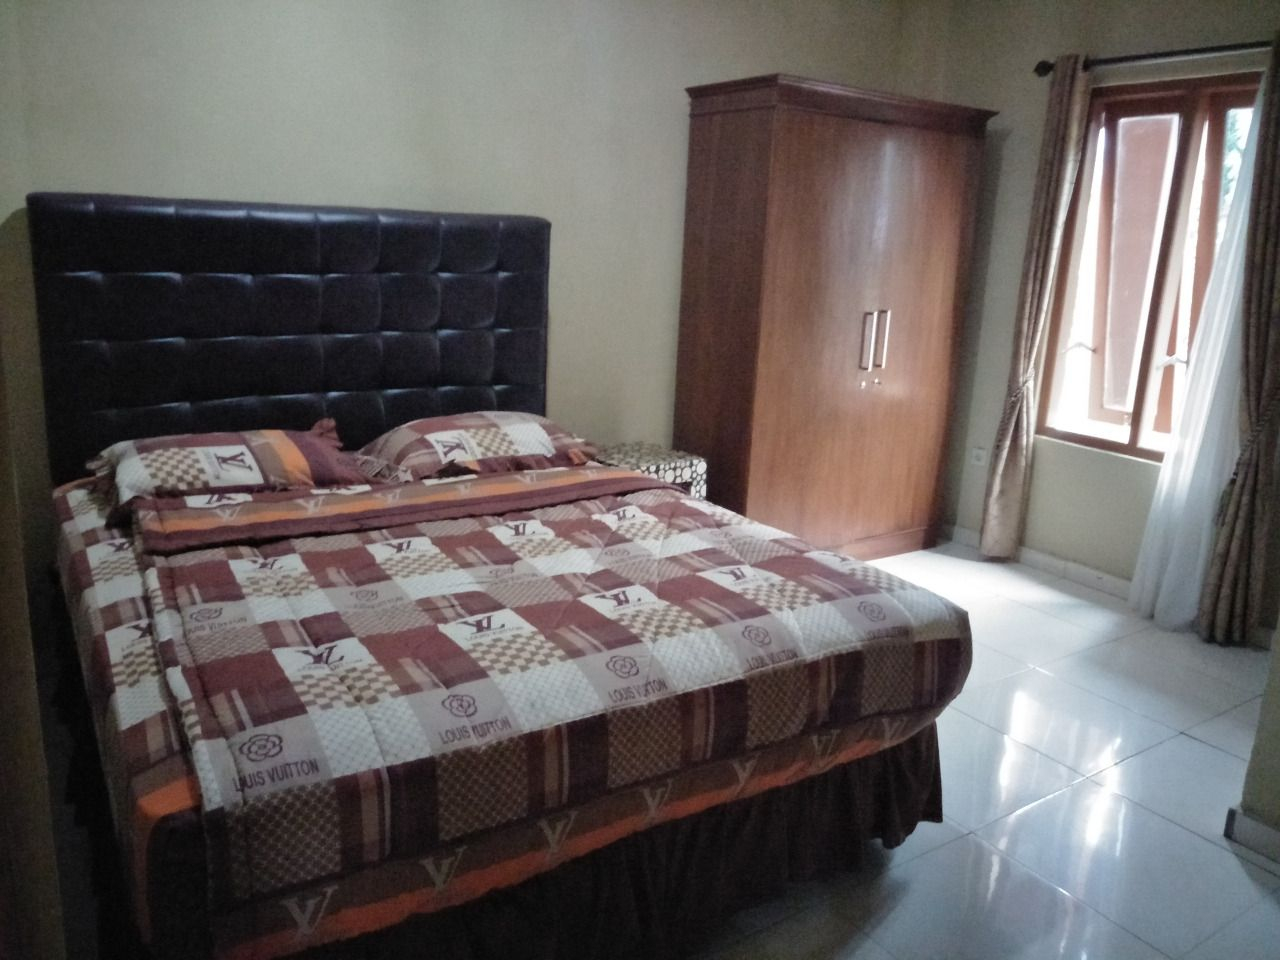 Bedroom 2, RedDoorz Plus @ Bukit Sekipan Tawangmangu, Karanganyar